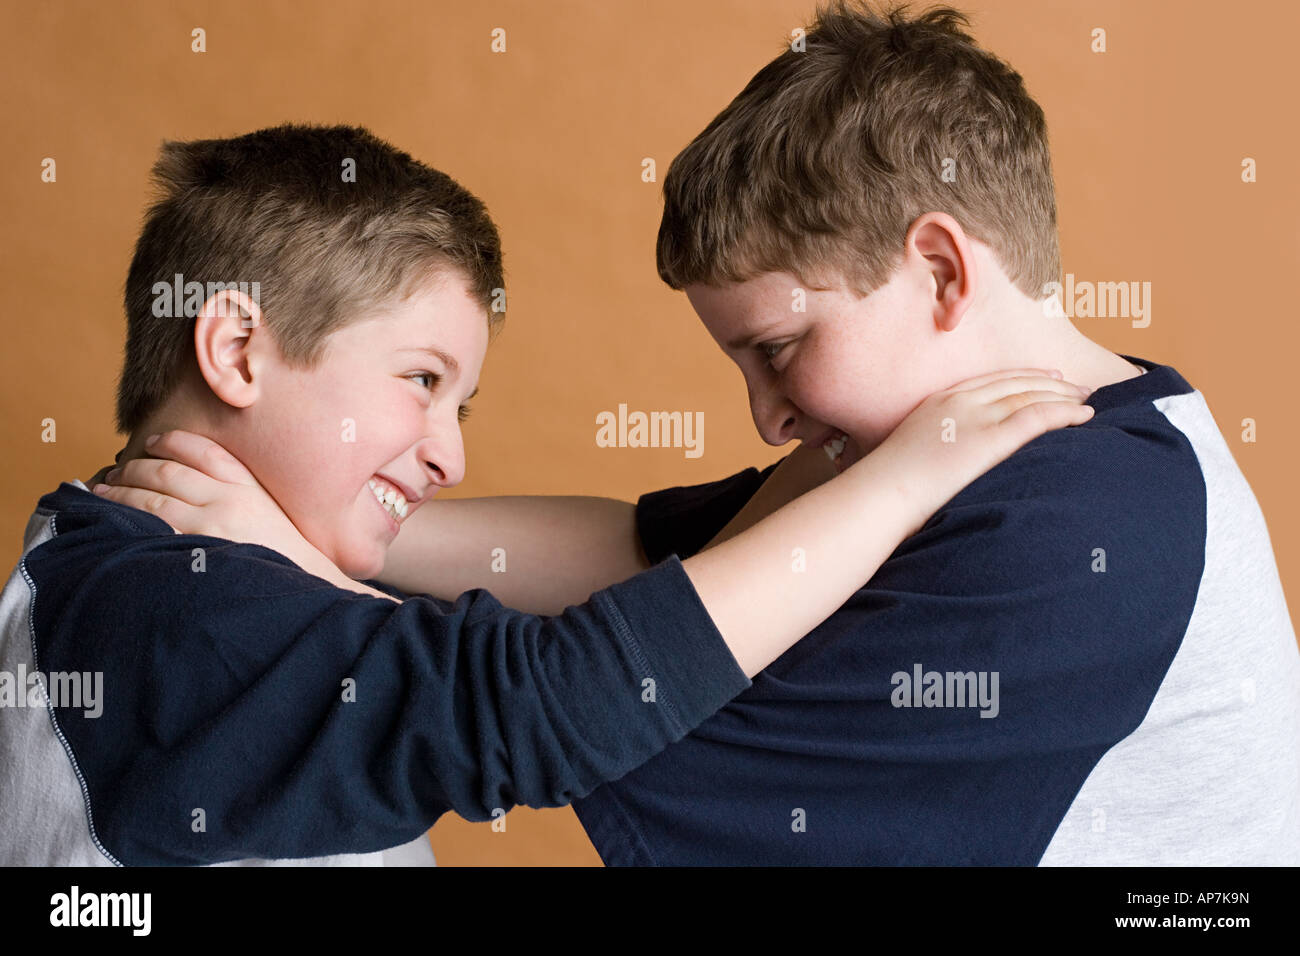 Boys strangling eachother Stock Photo